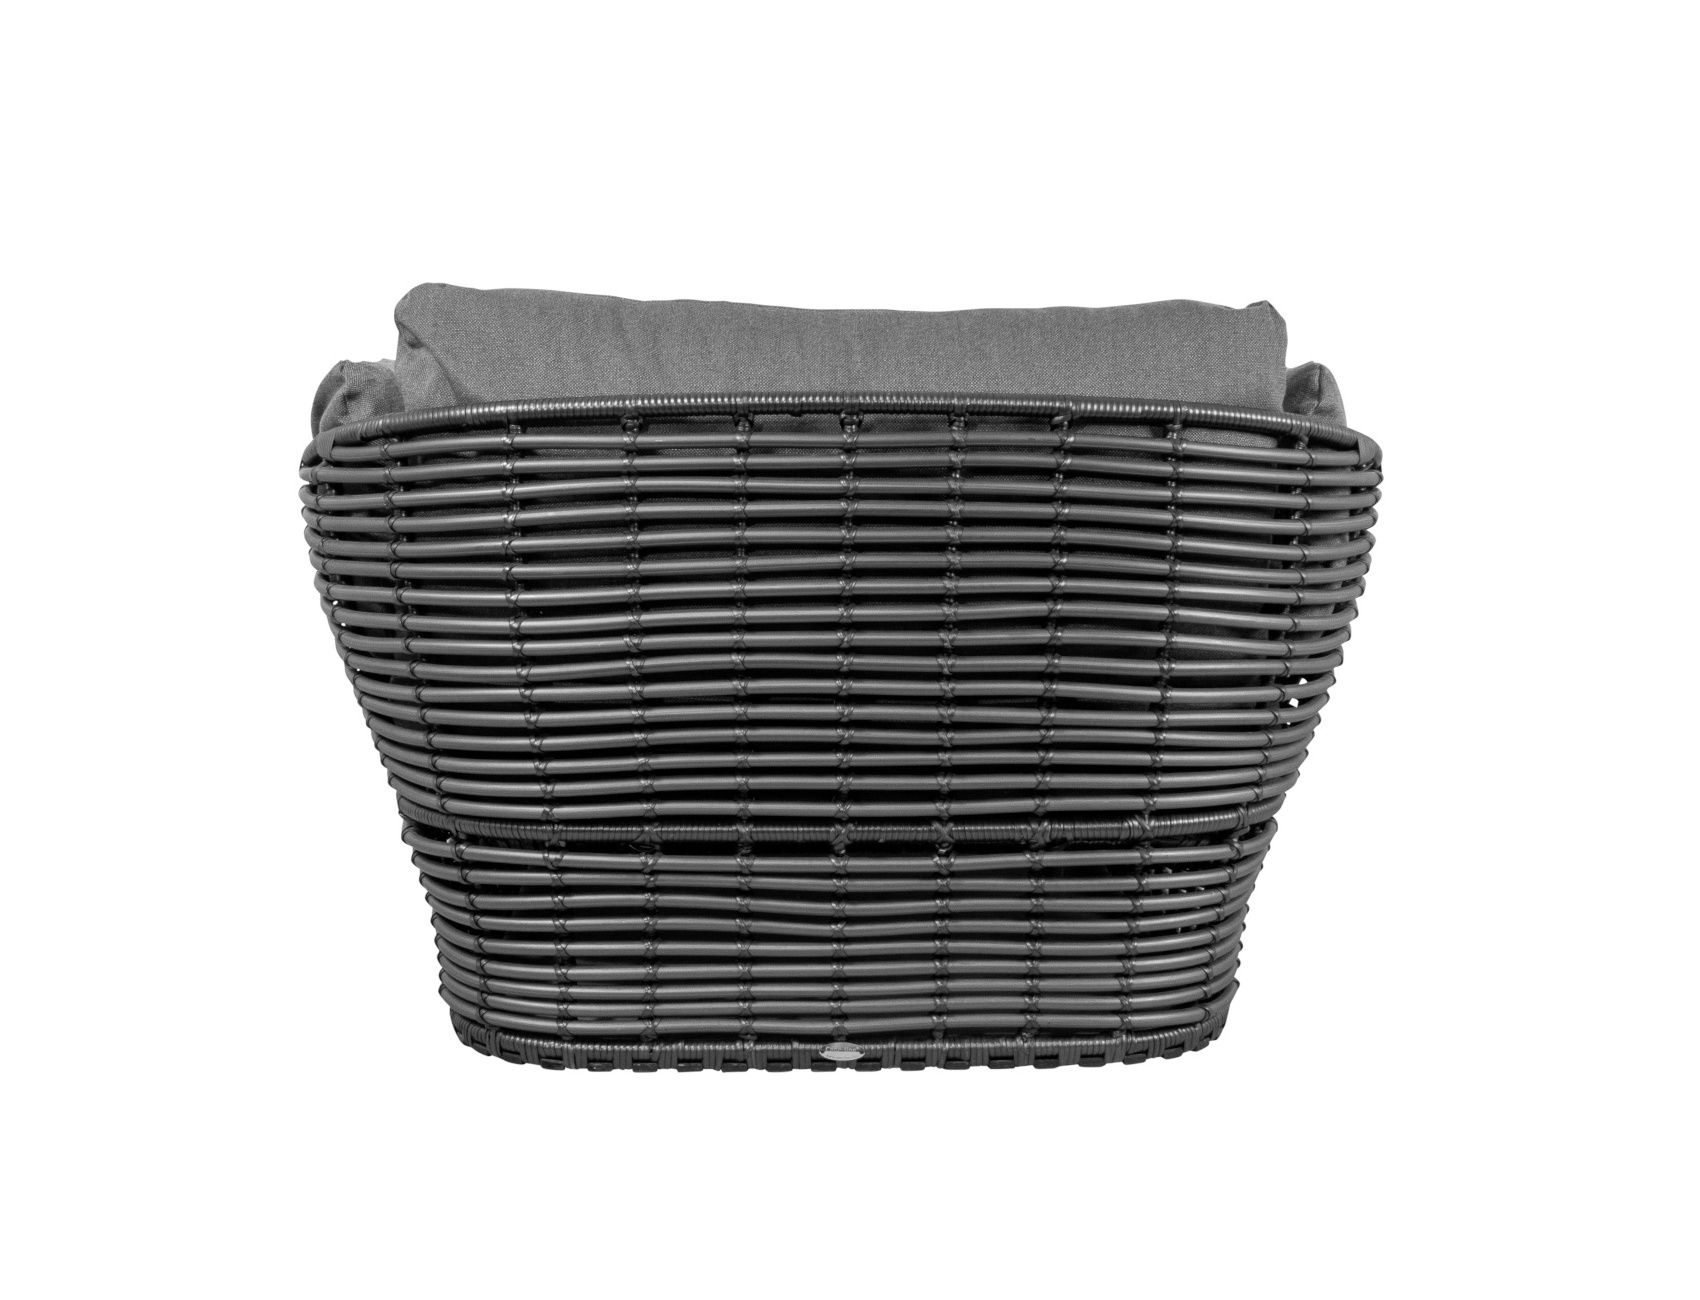 Basket Daybed, graphit / grau